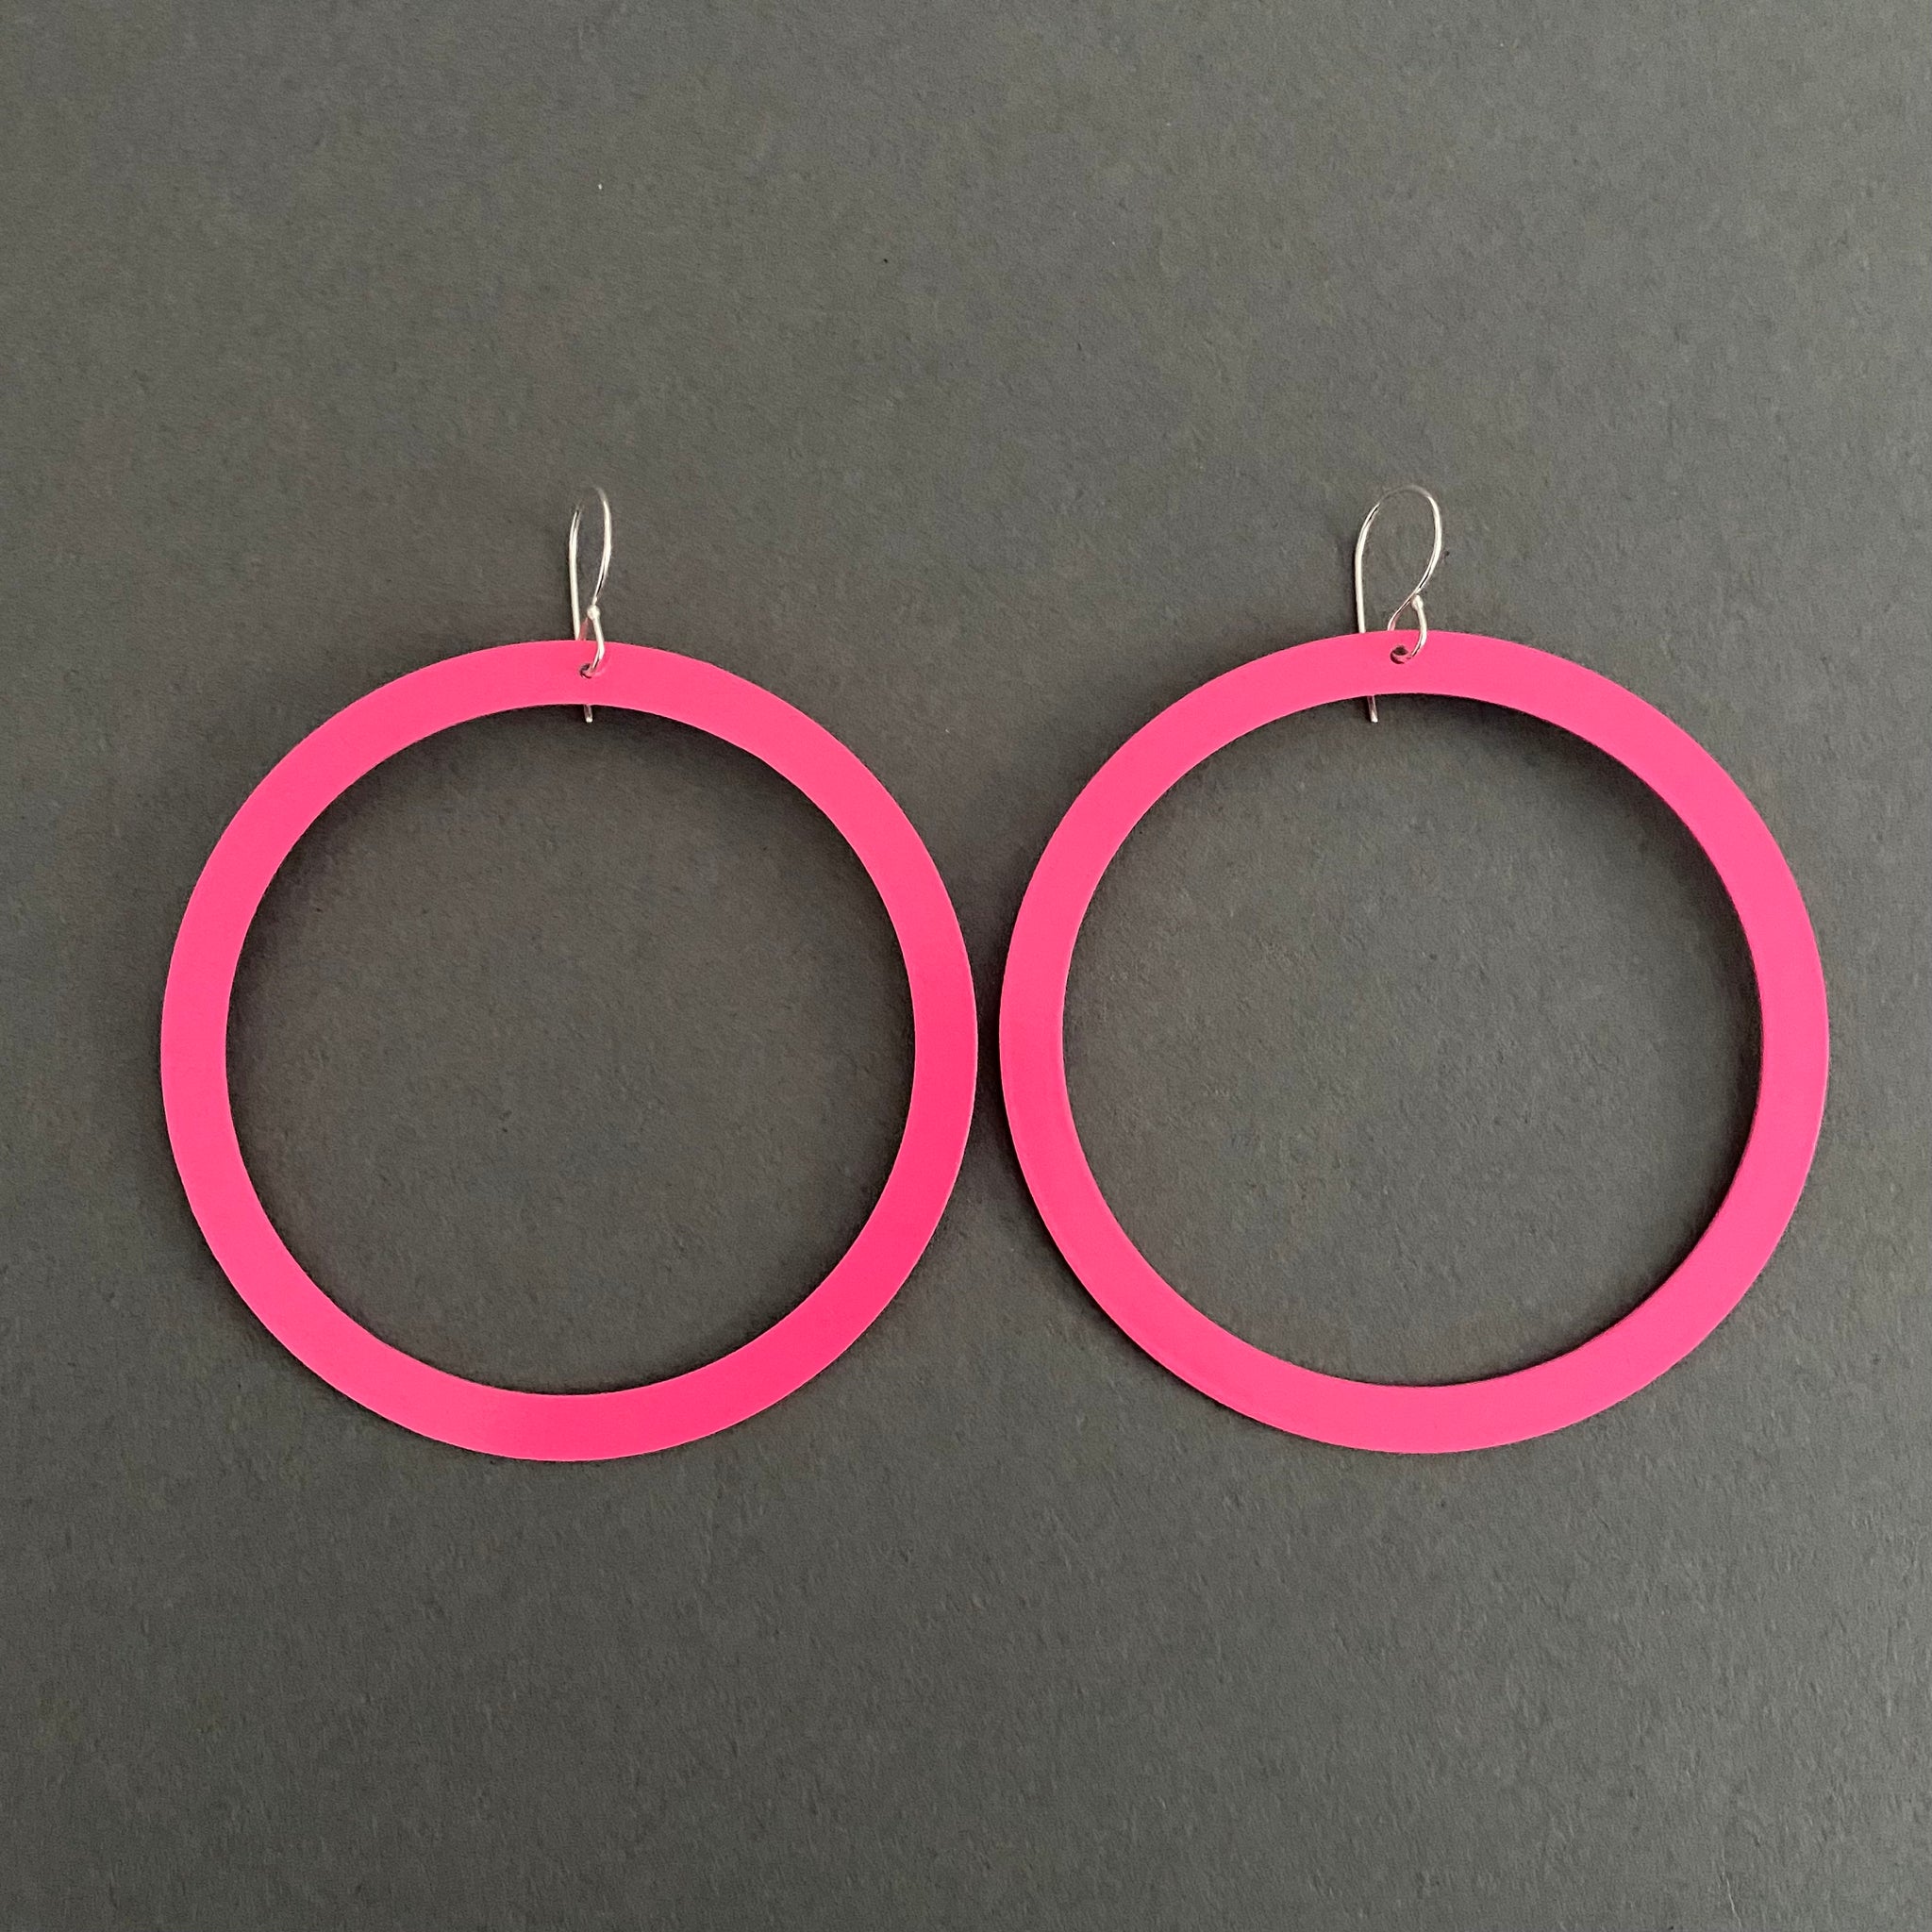 Bangle Earrings - Wide, Sassy Pink